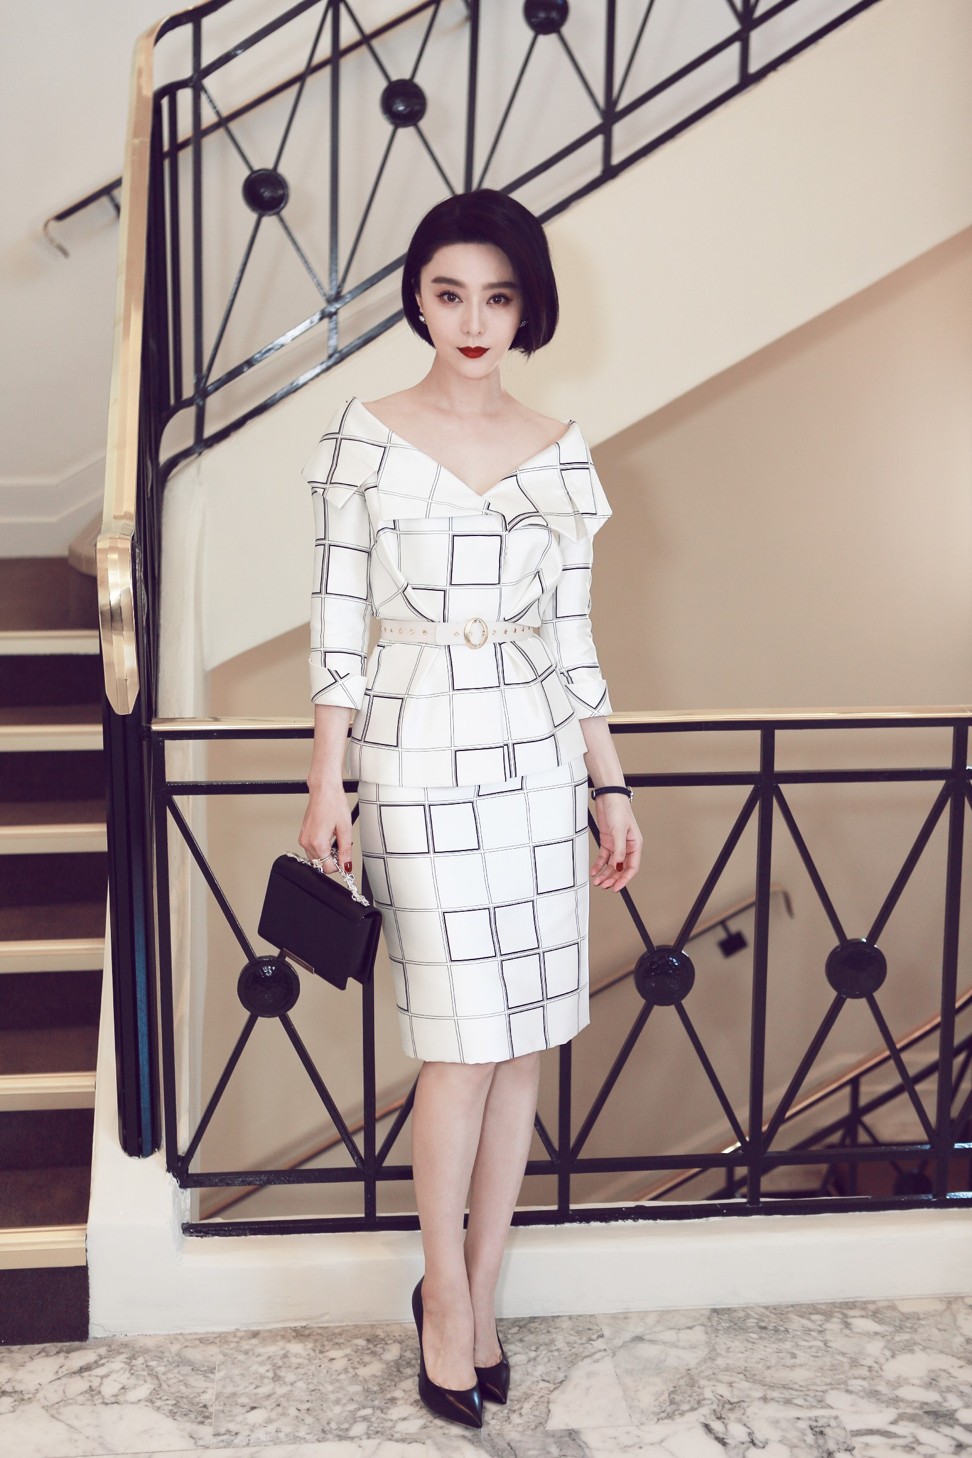 Chinese film star Fan Bingbing always looks effortlessly elegant, with a little help from her stylists.